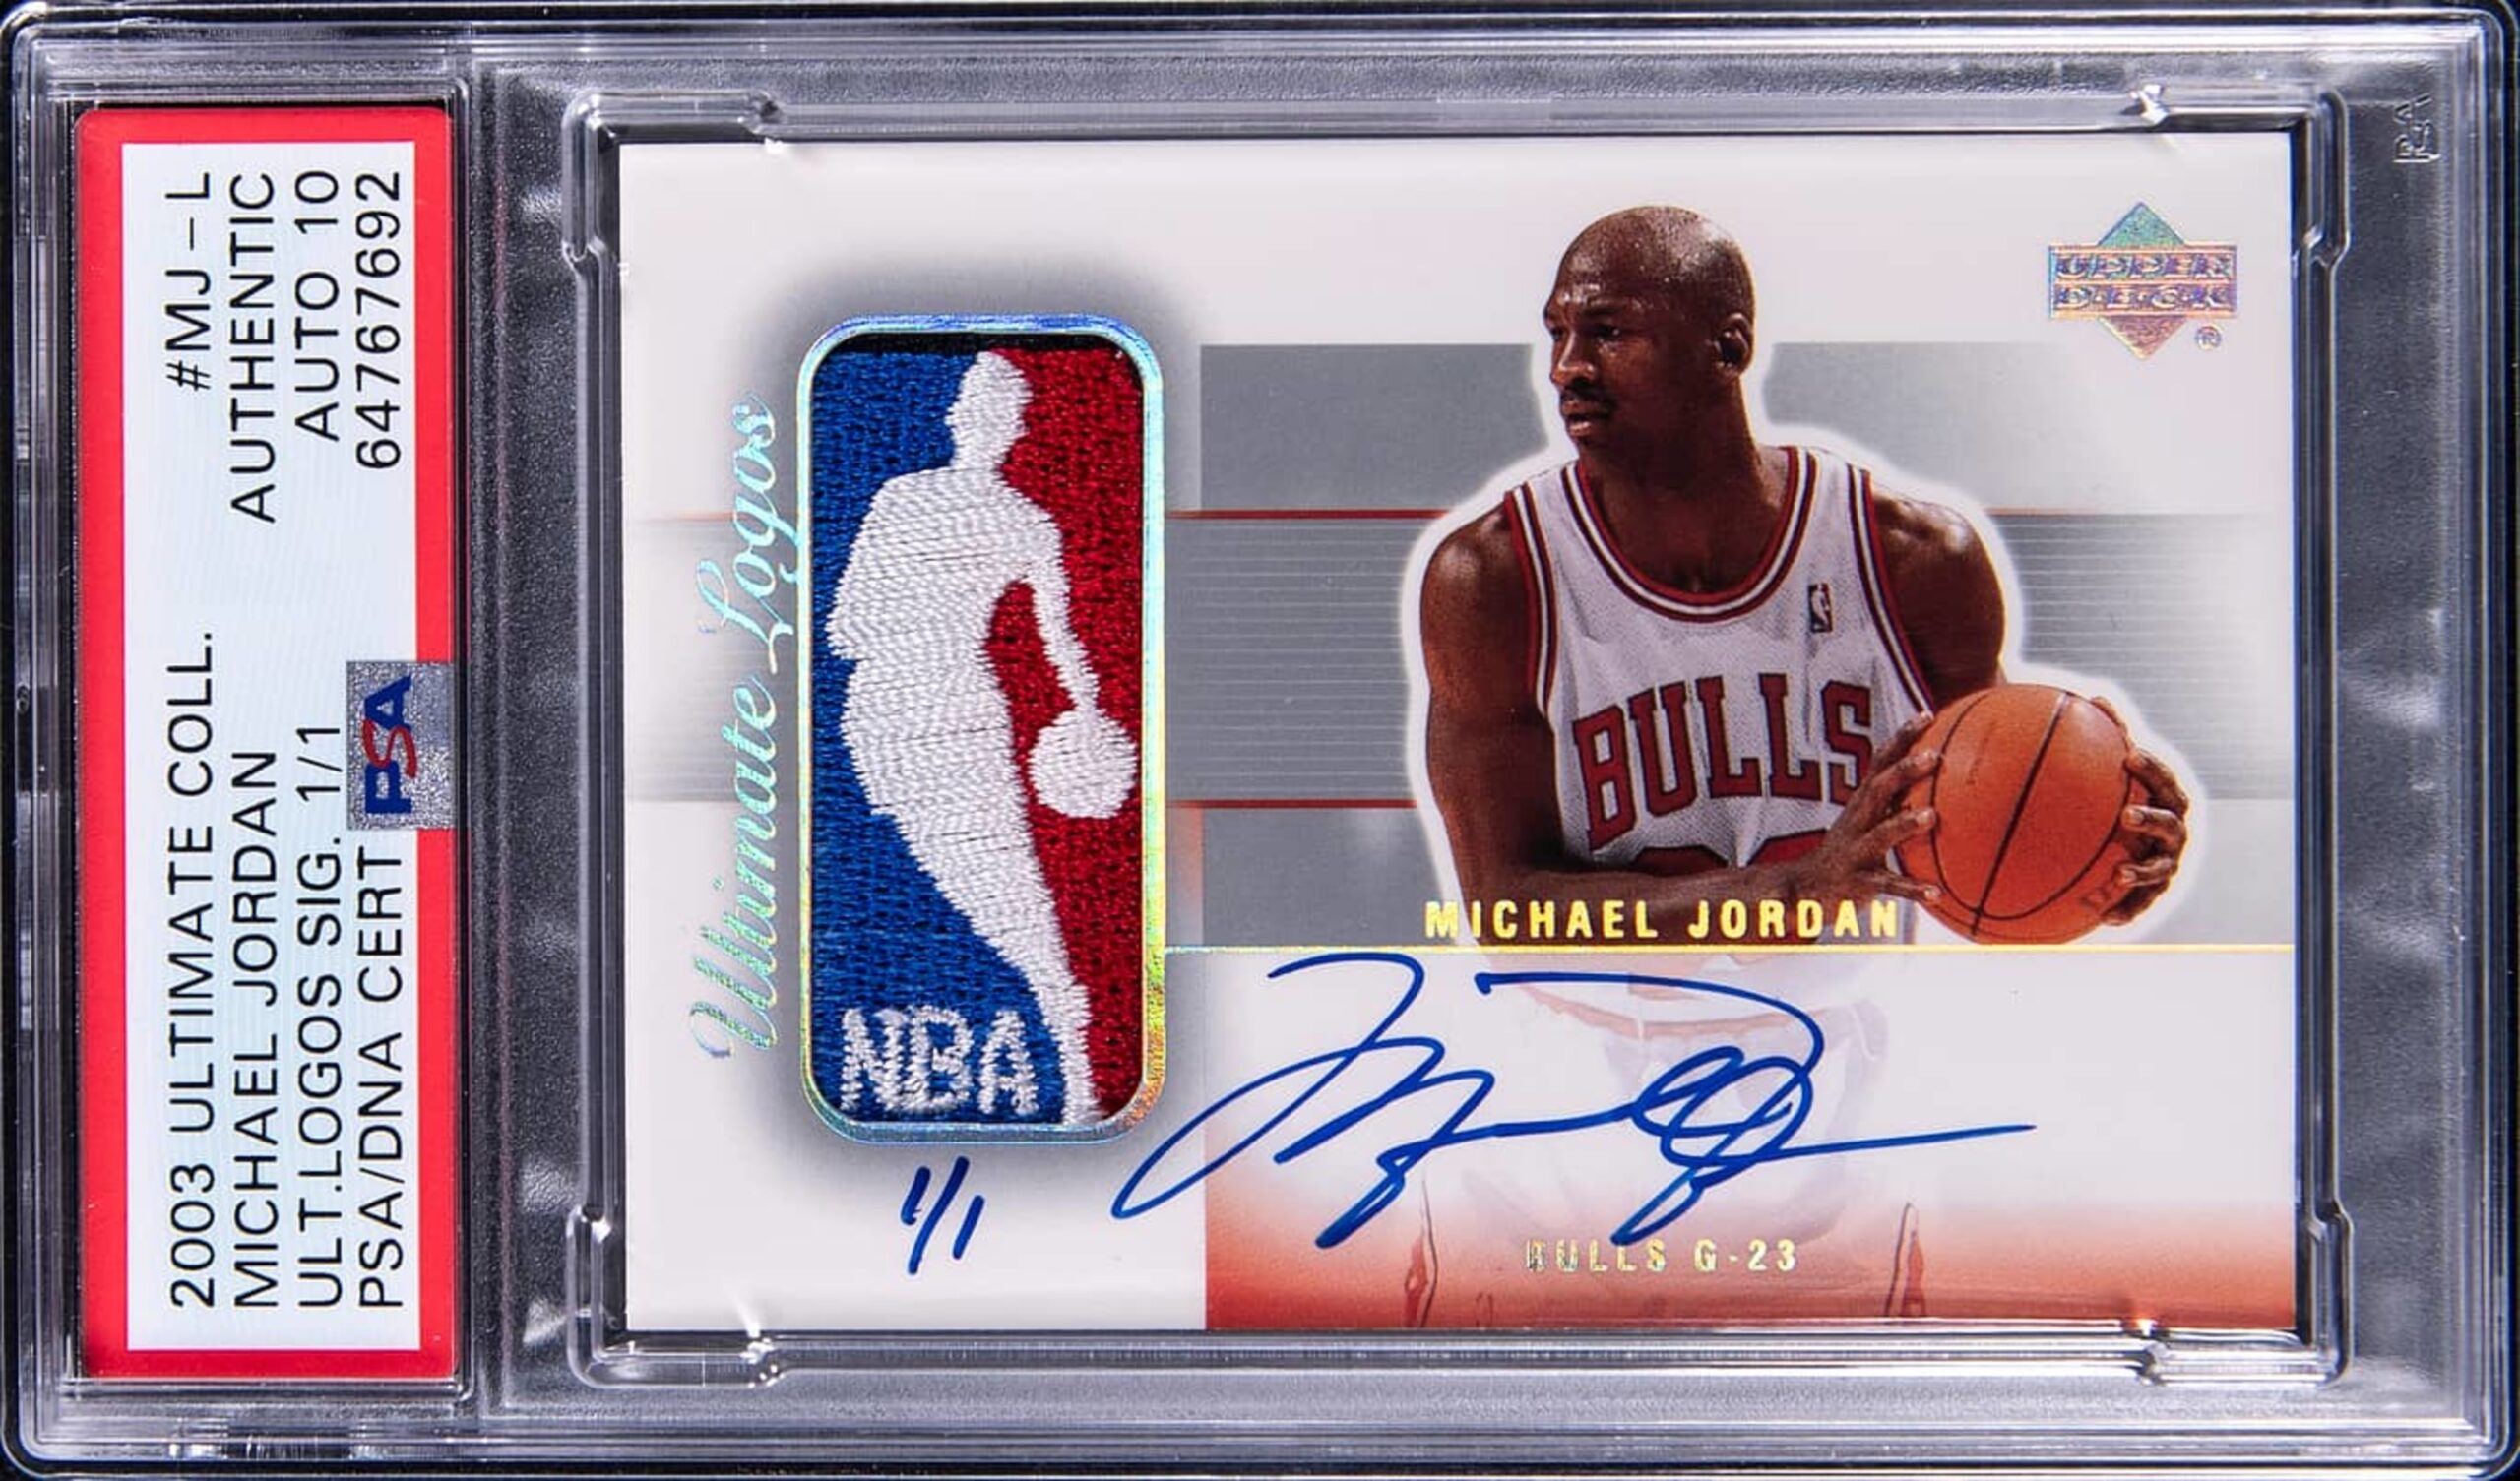 2003 Upper Deck Michael Jordan Ultimate Collections Logoman Autograph 1/1.